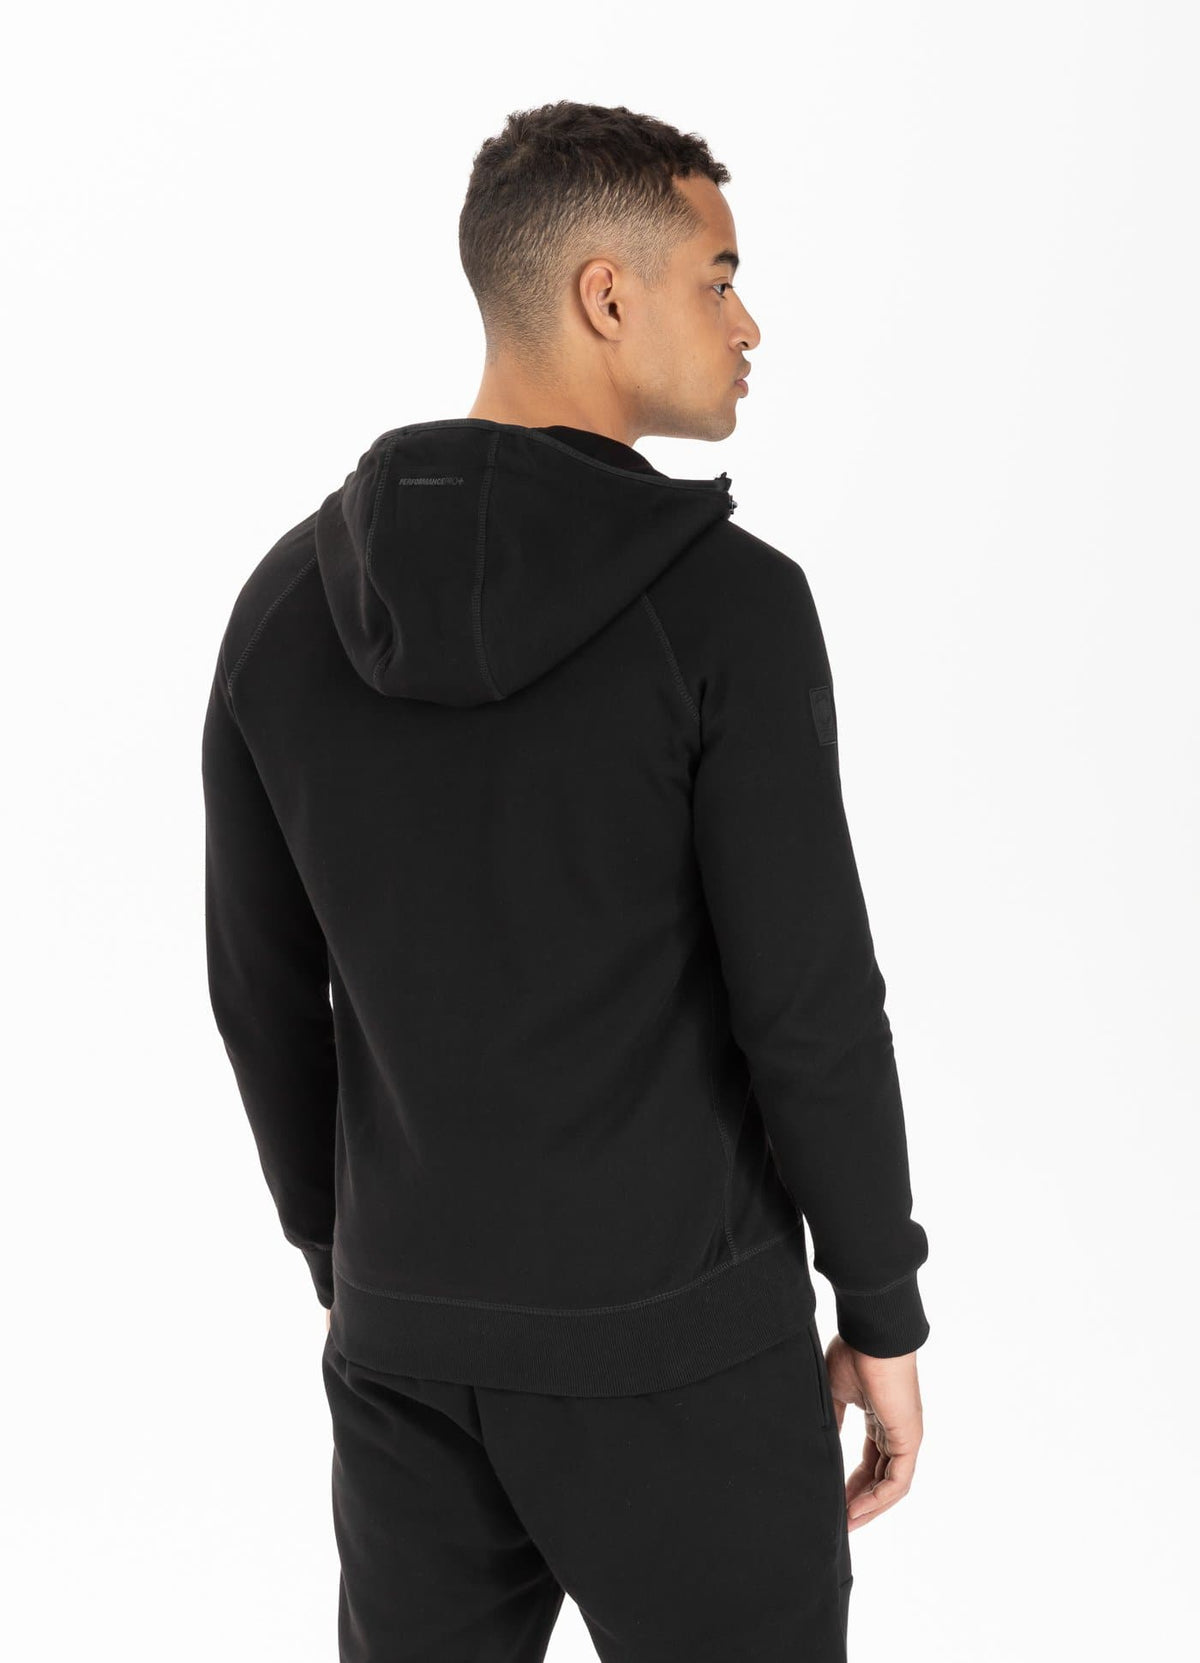 Hooded Sweatjacket HARRIS Black - Pitbull West Coast International Store 